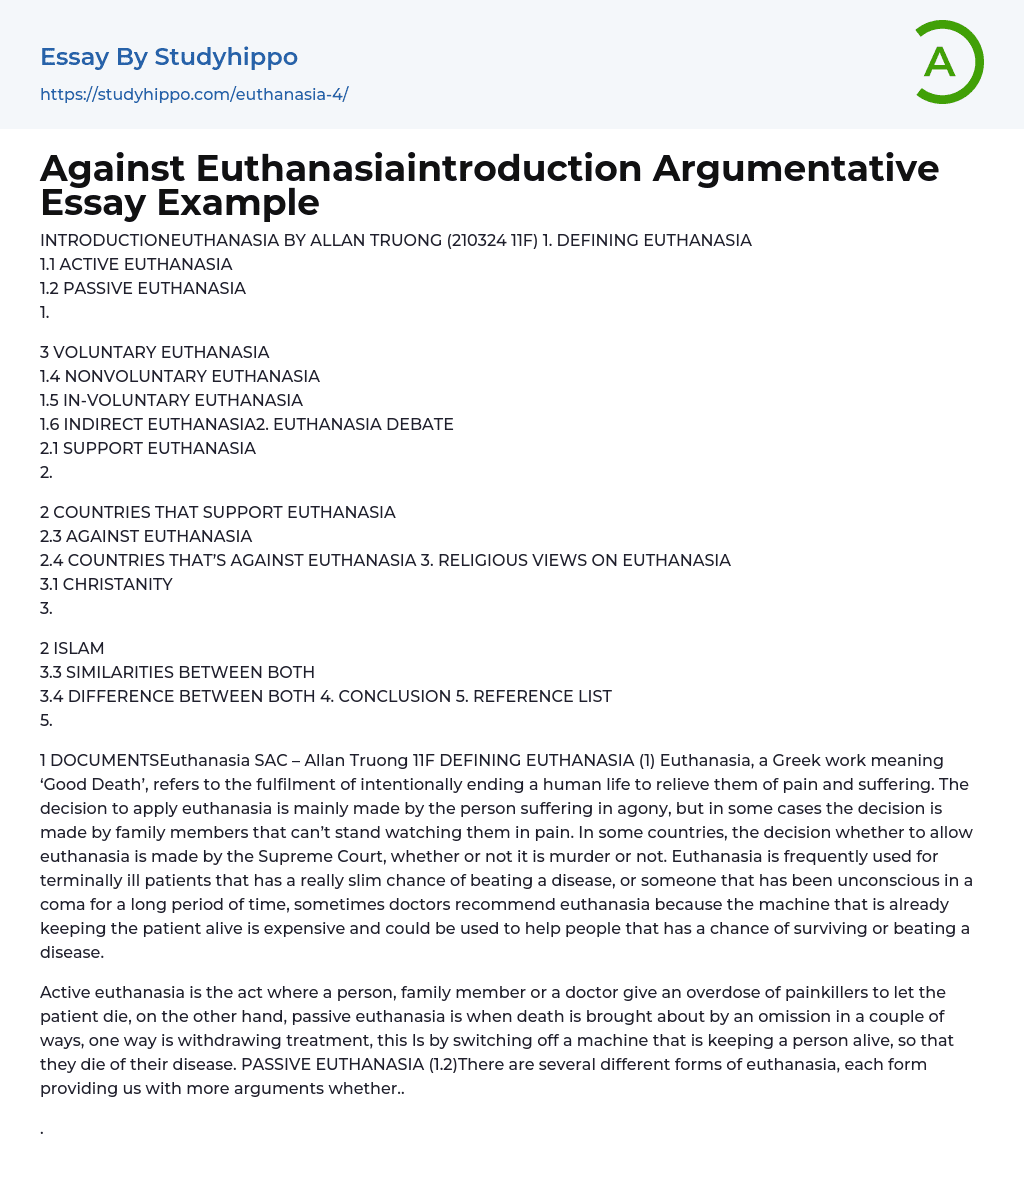 Against Euthanasiaintroduction Argumentative Essay Example